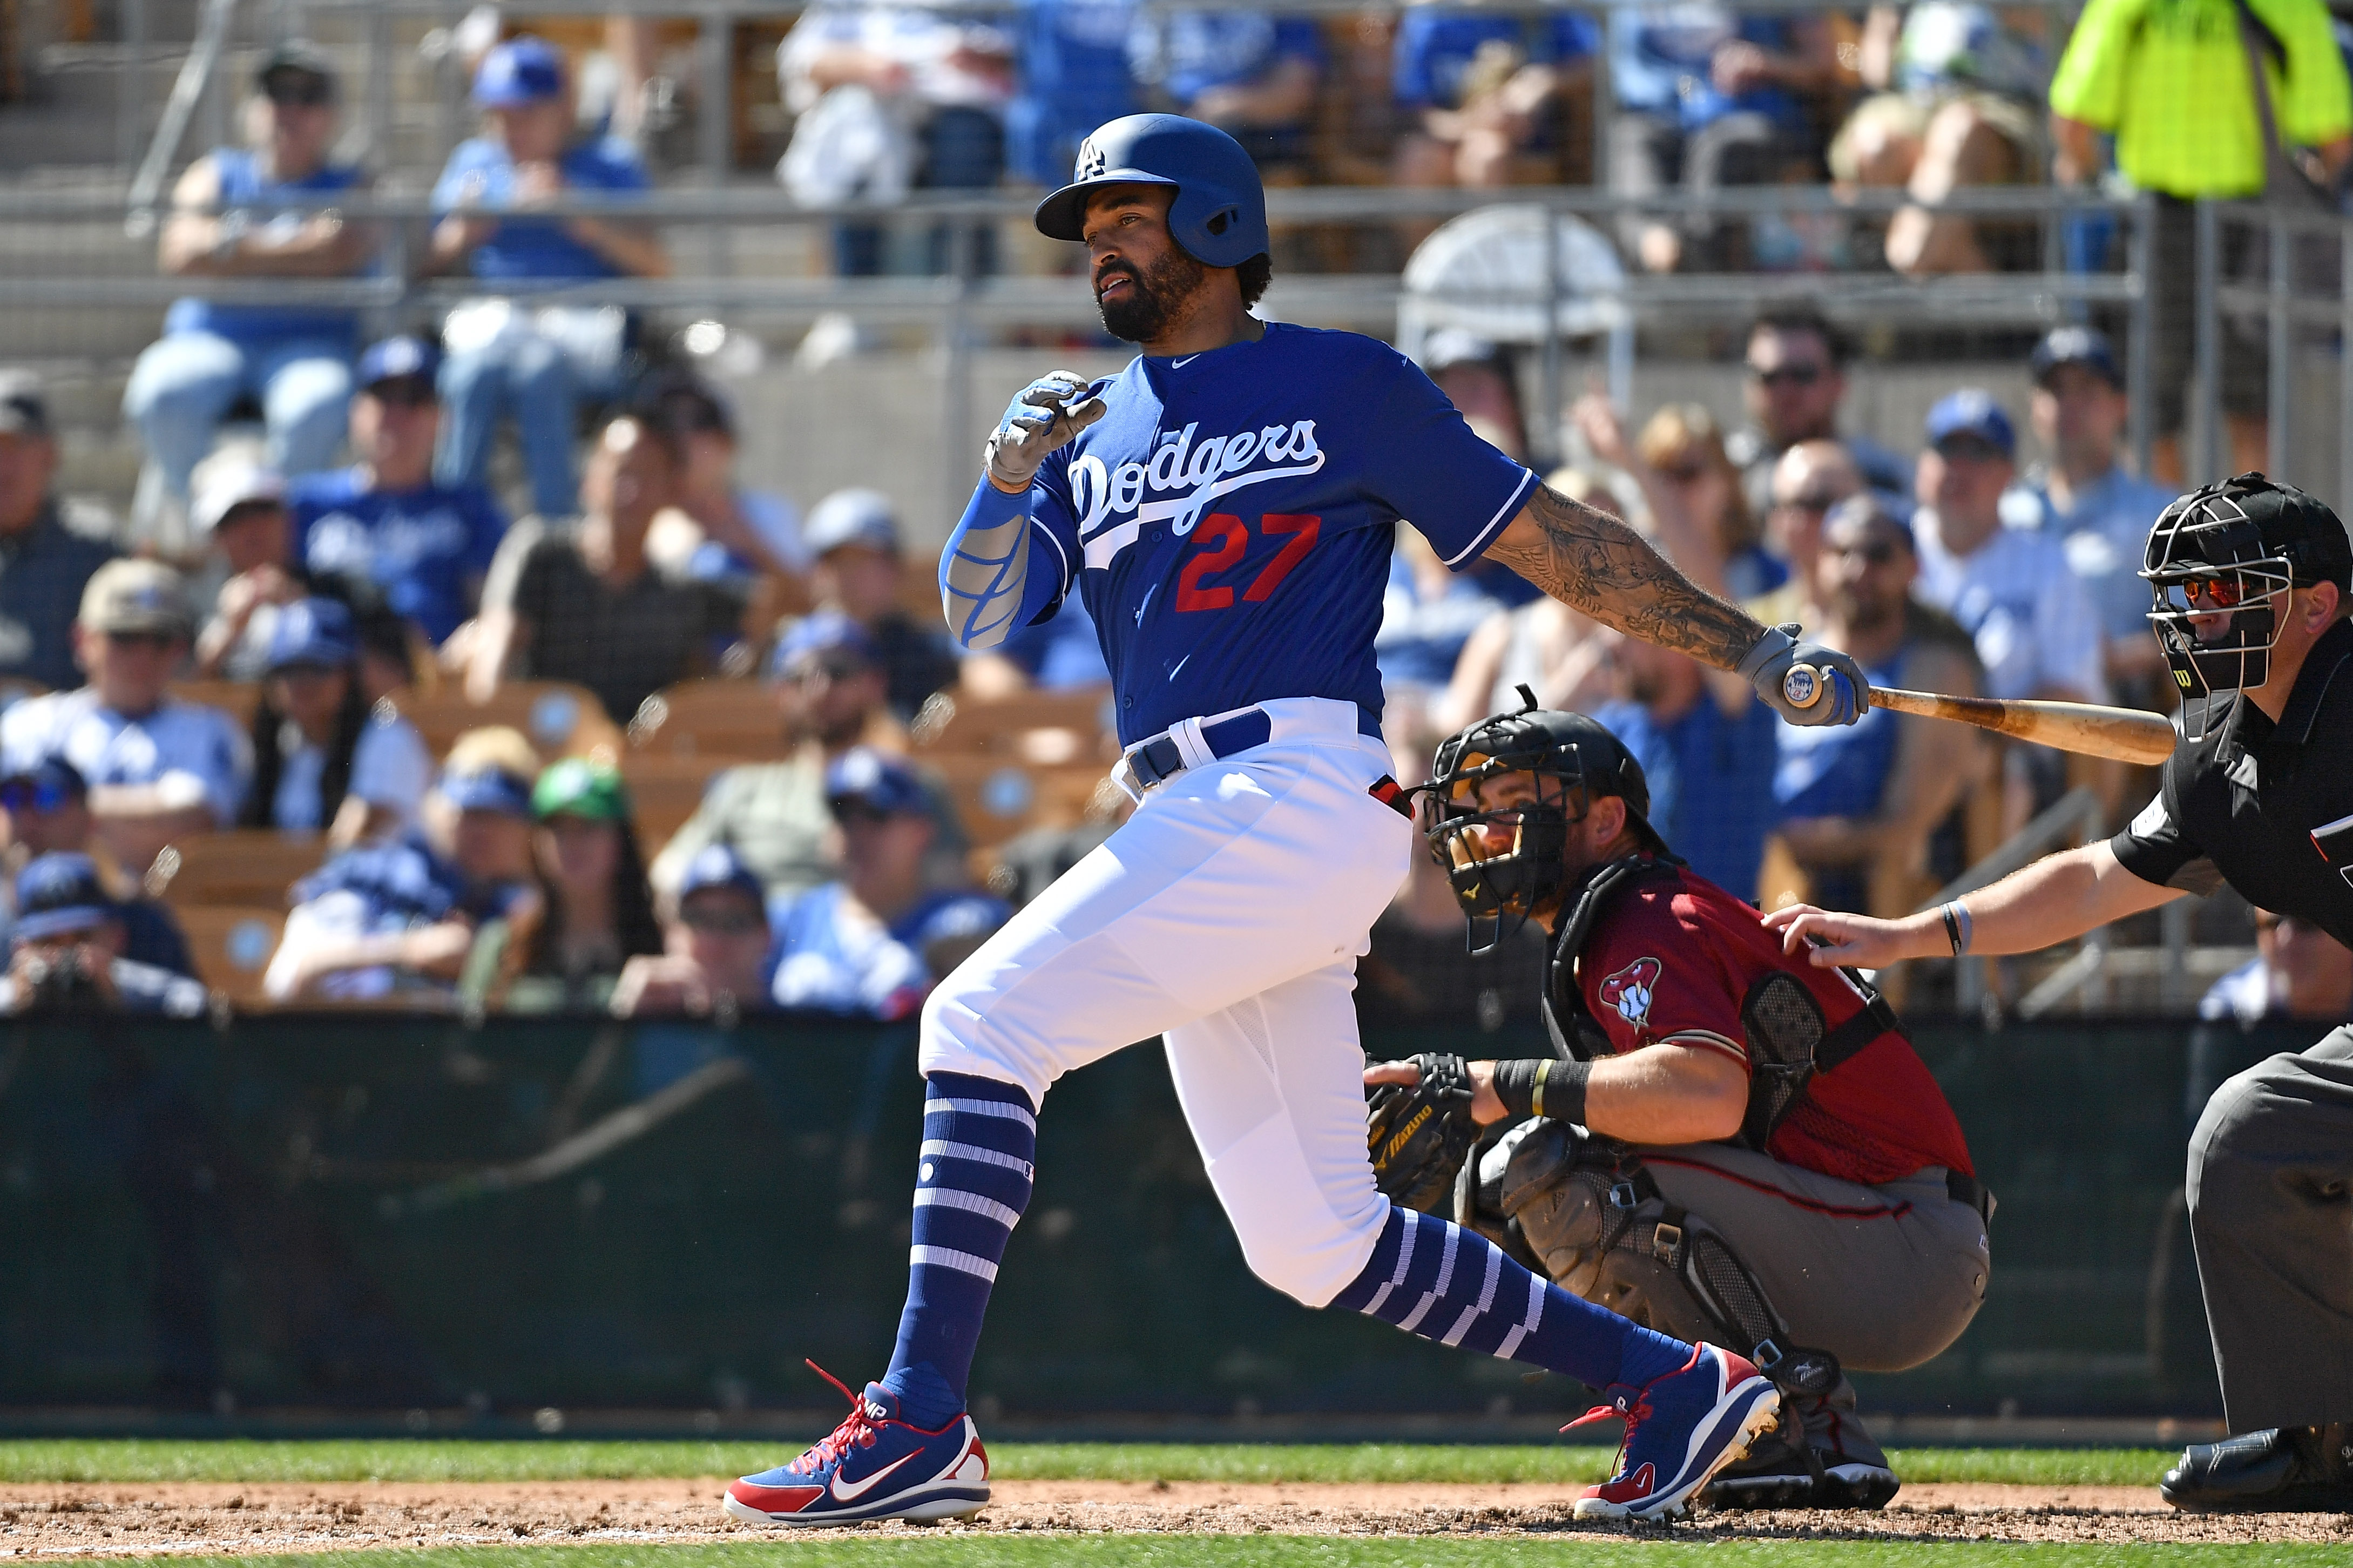 Los Angeles Dodgers: Matt Kemp making a strong case opening day nod